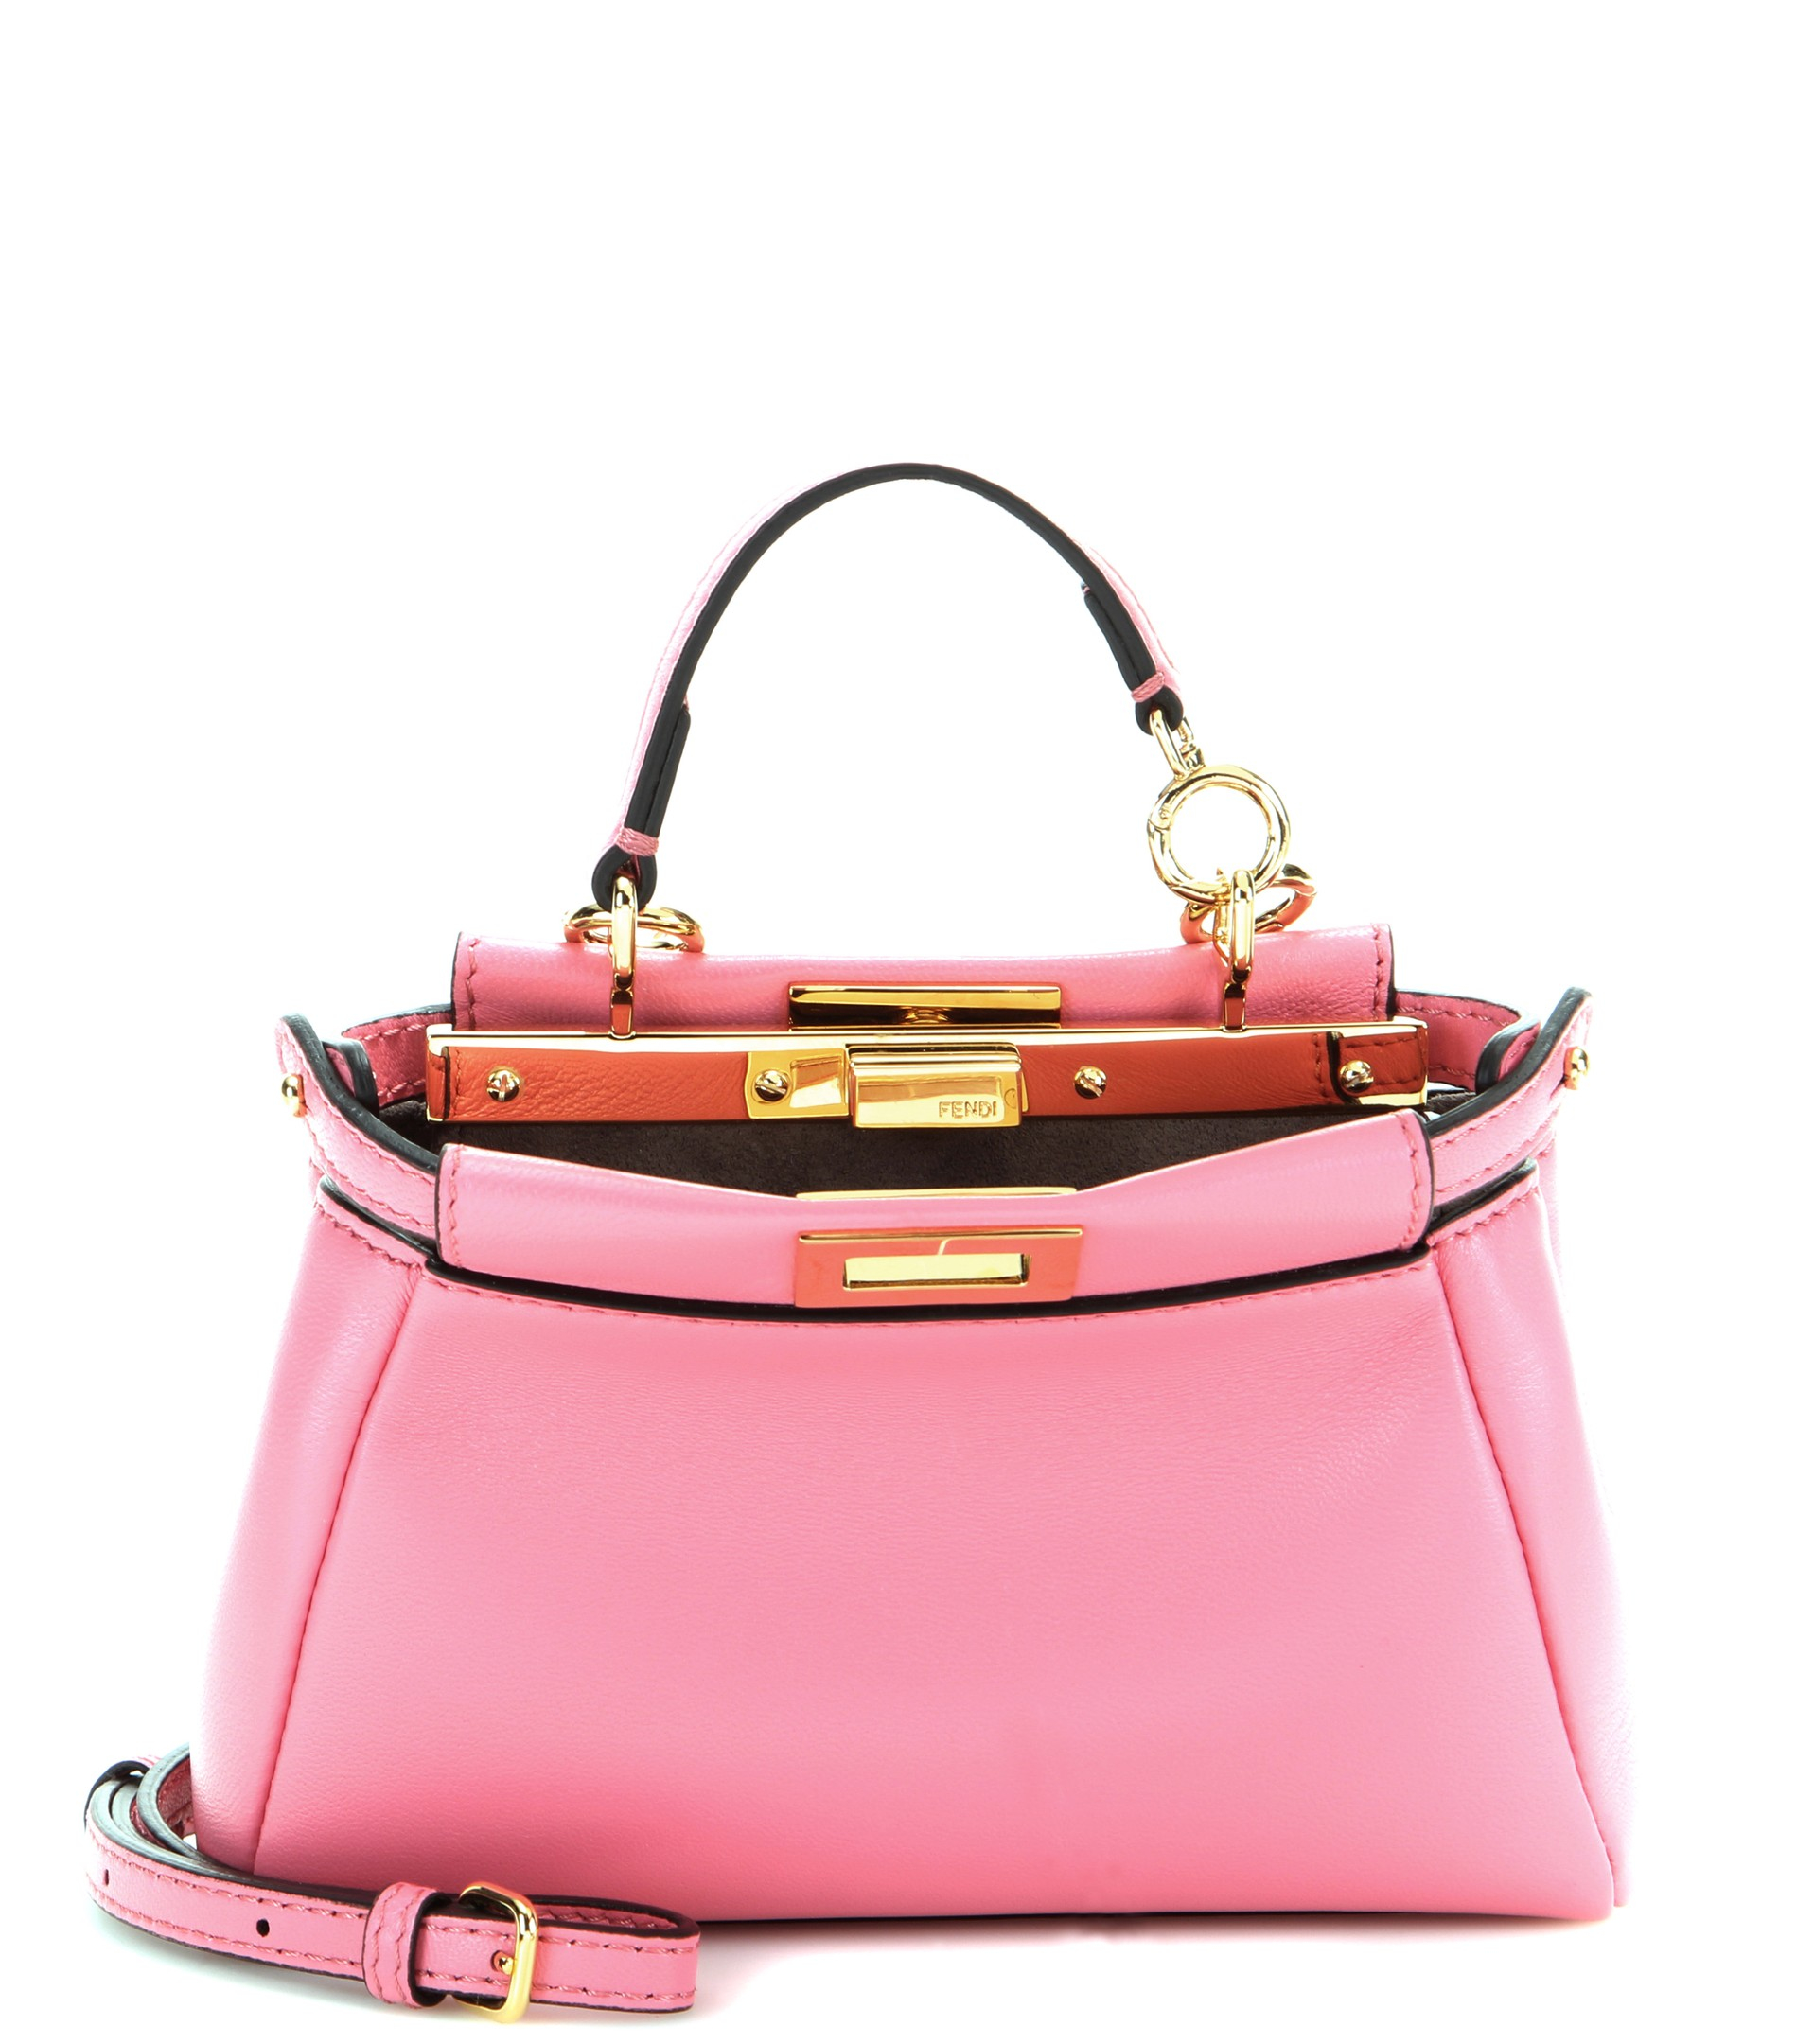 Fendi Micro Peekaboo Leather Shoulder Bag in Pink - Lyst